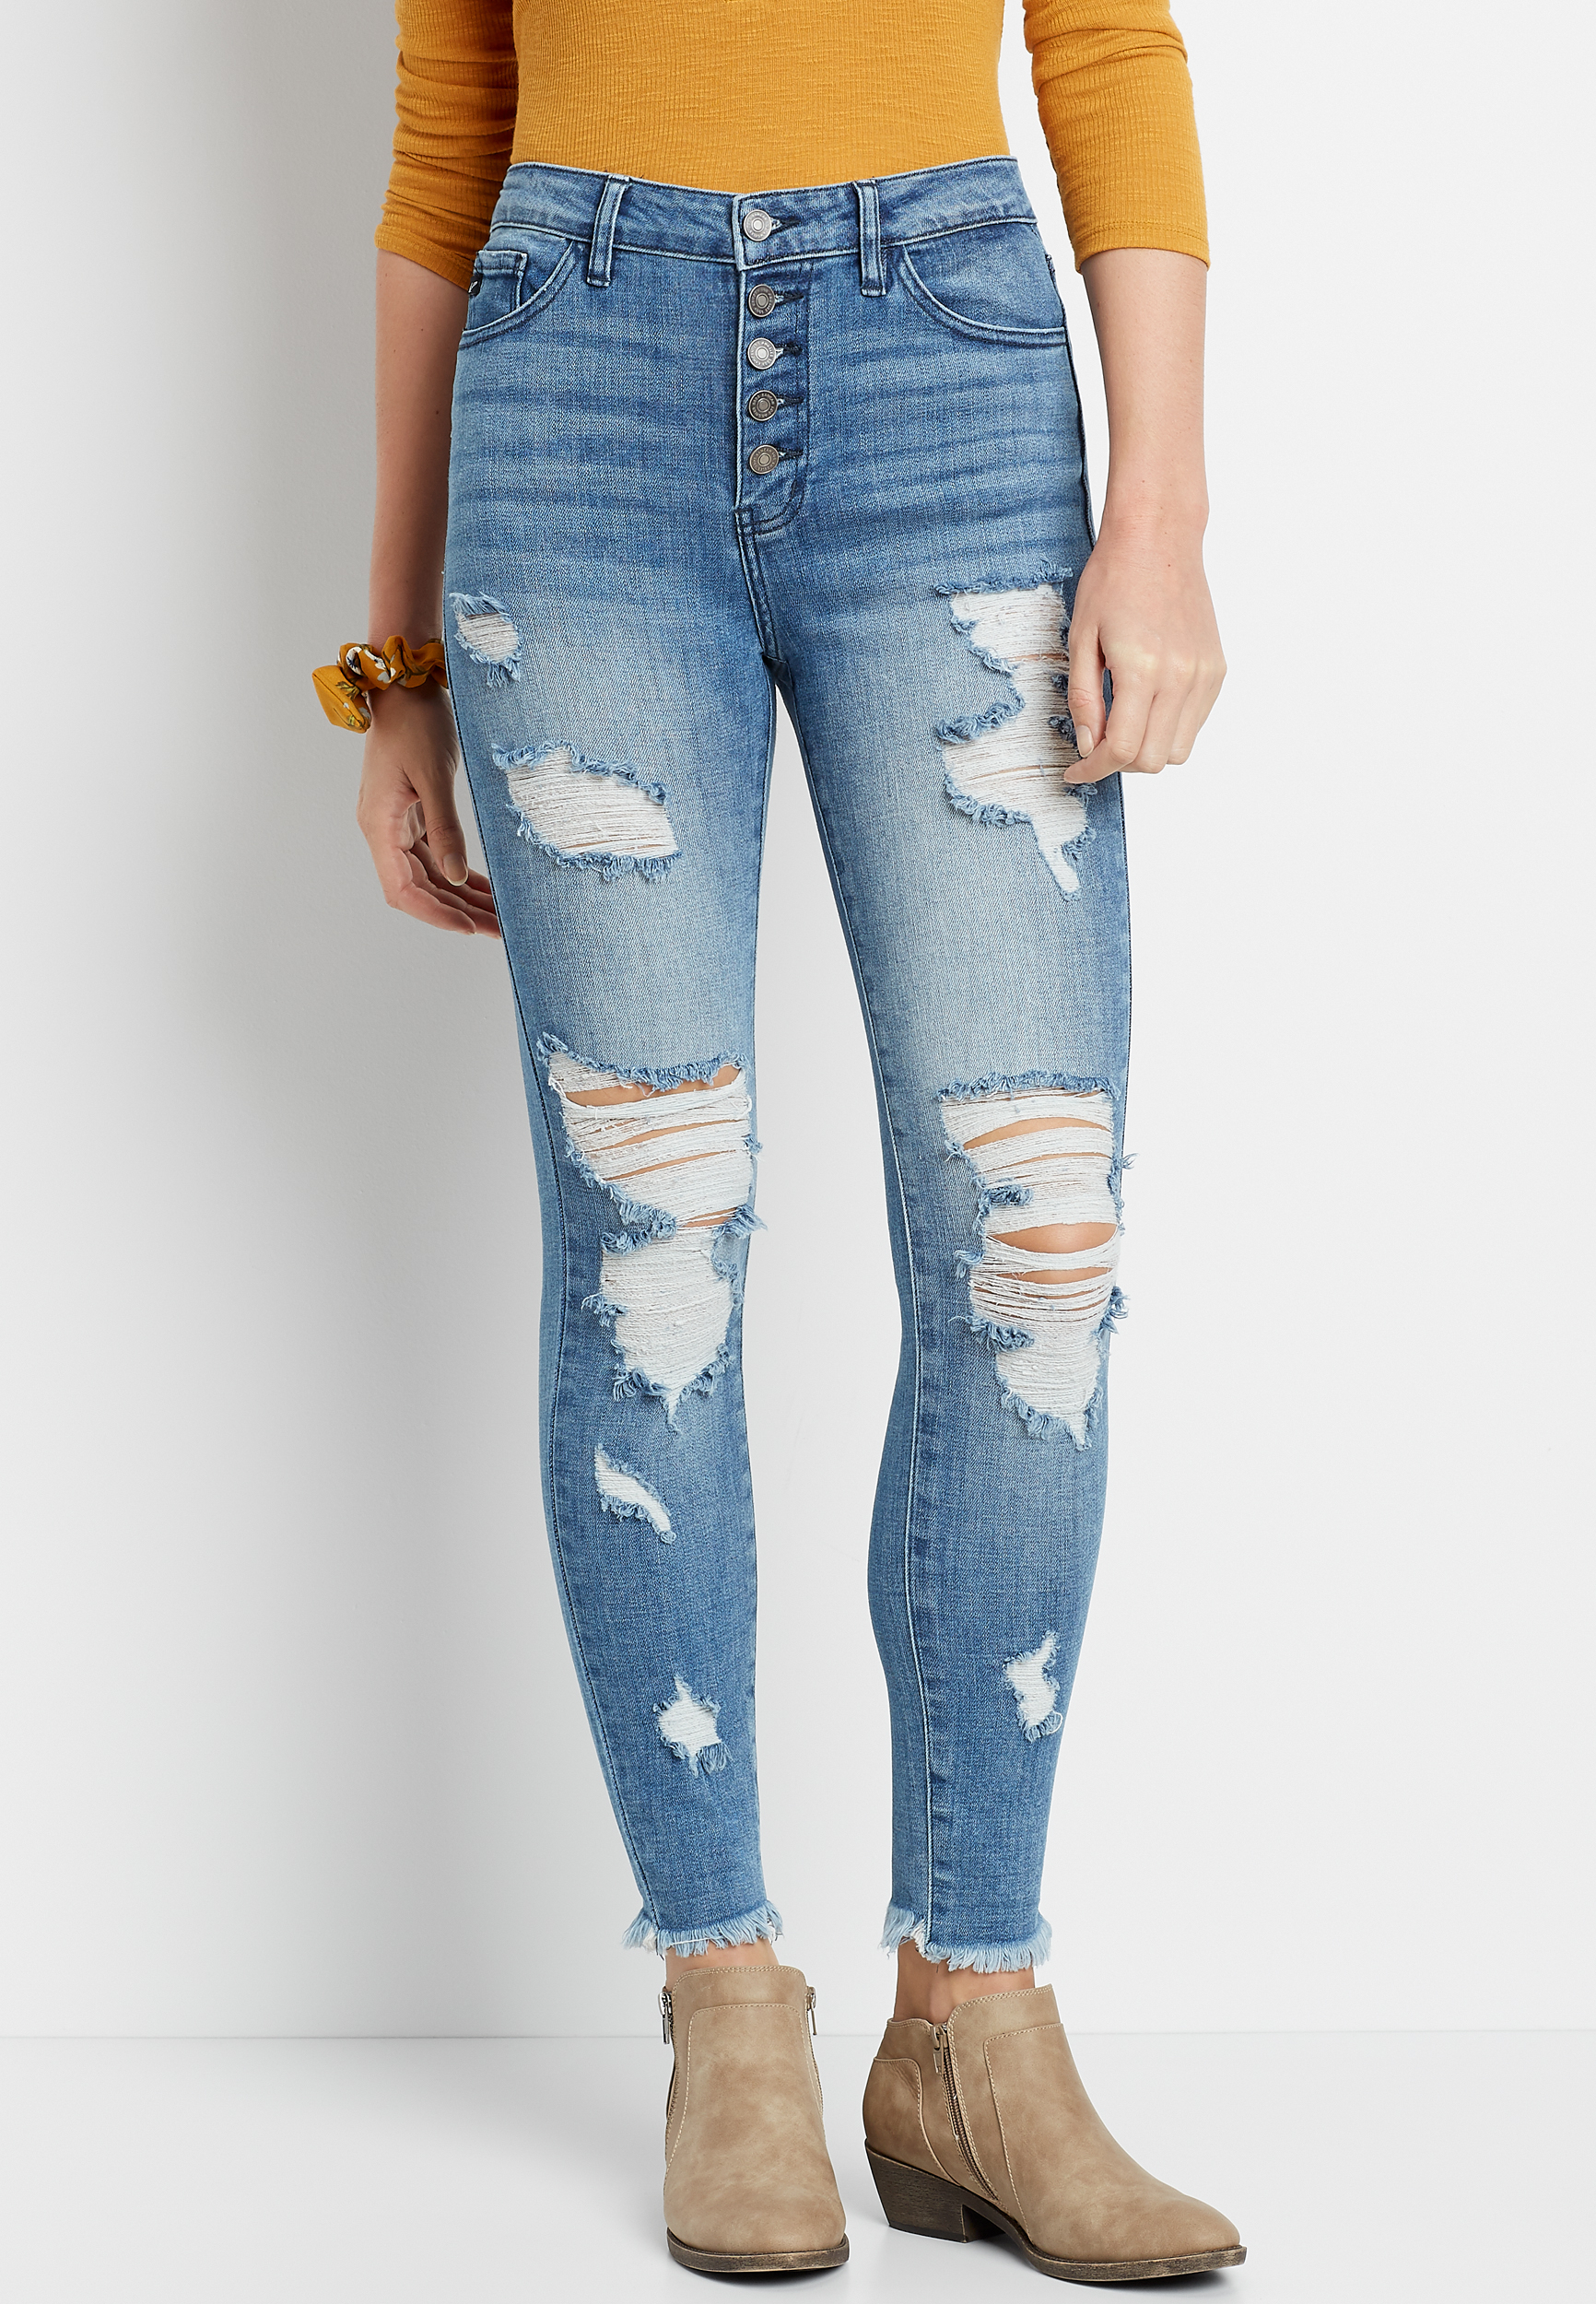 wrangler jeans 936 slim fit prewashed